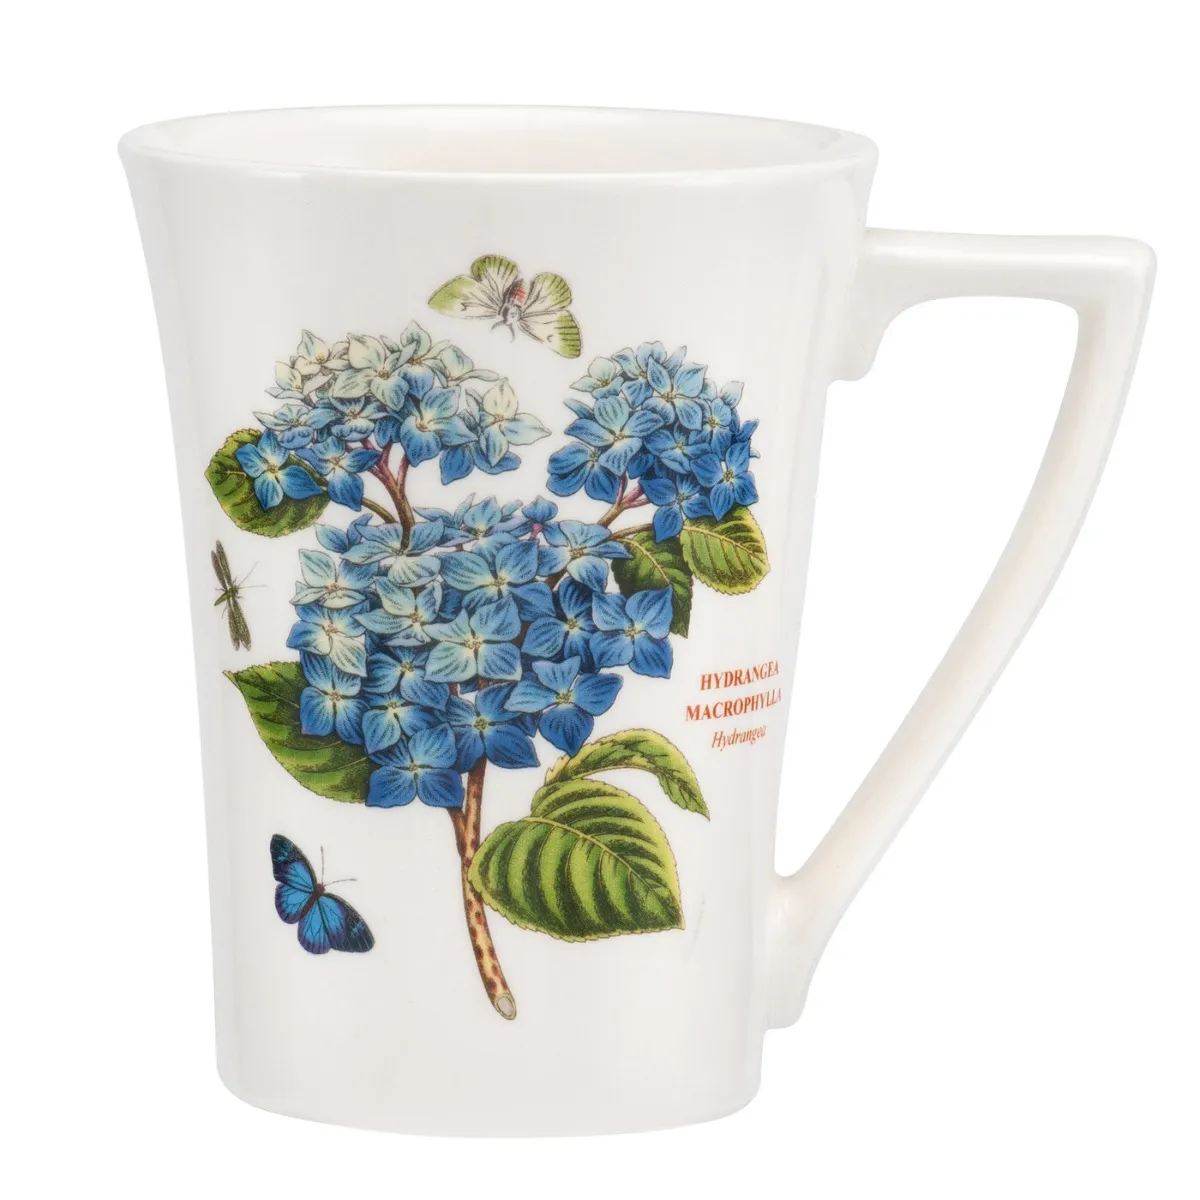 SECONDS Botanic Garden Mandarin Mug 10oz - No Guarantee of Flower Design